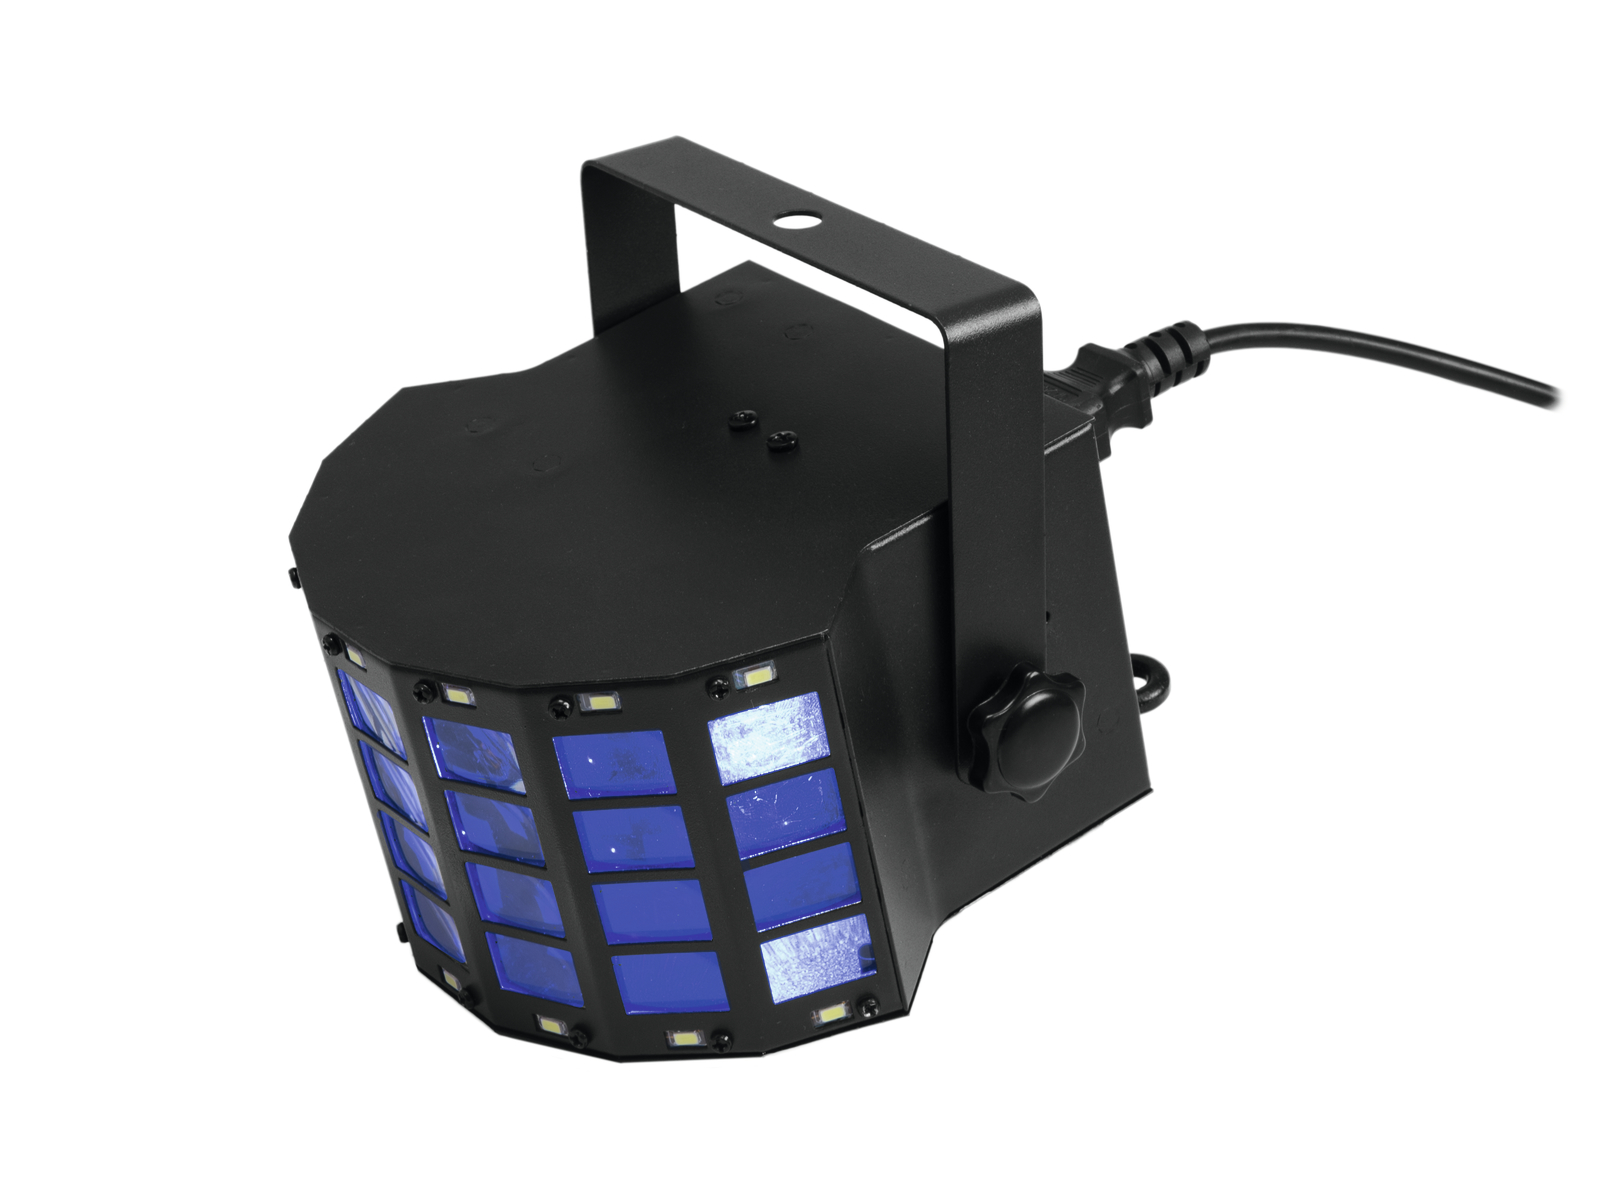 Eurolite LED DERBY 3x3W RGB paprskový efekt se stroboskopem